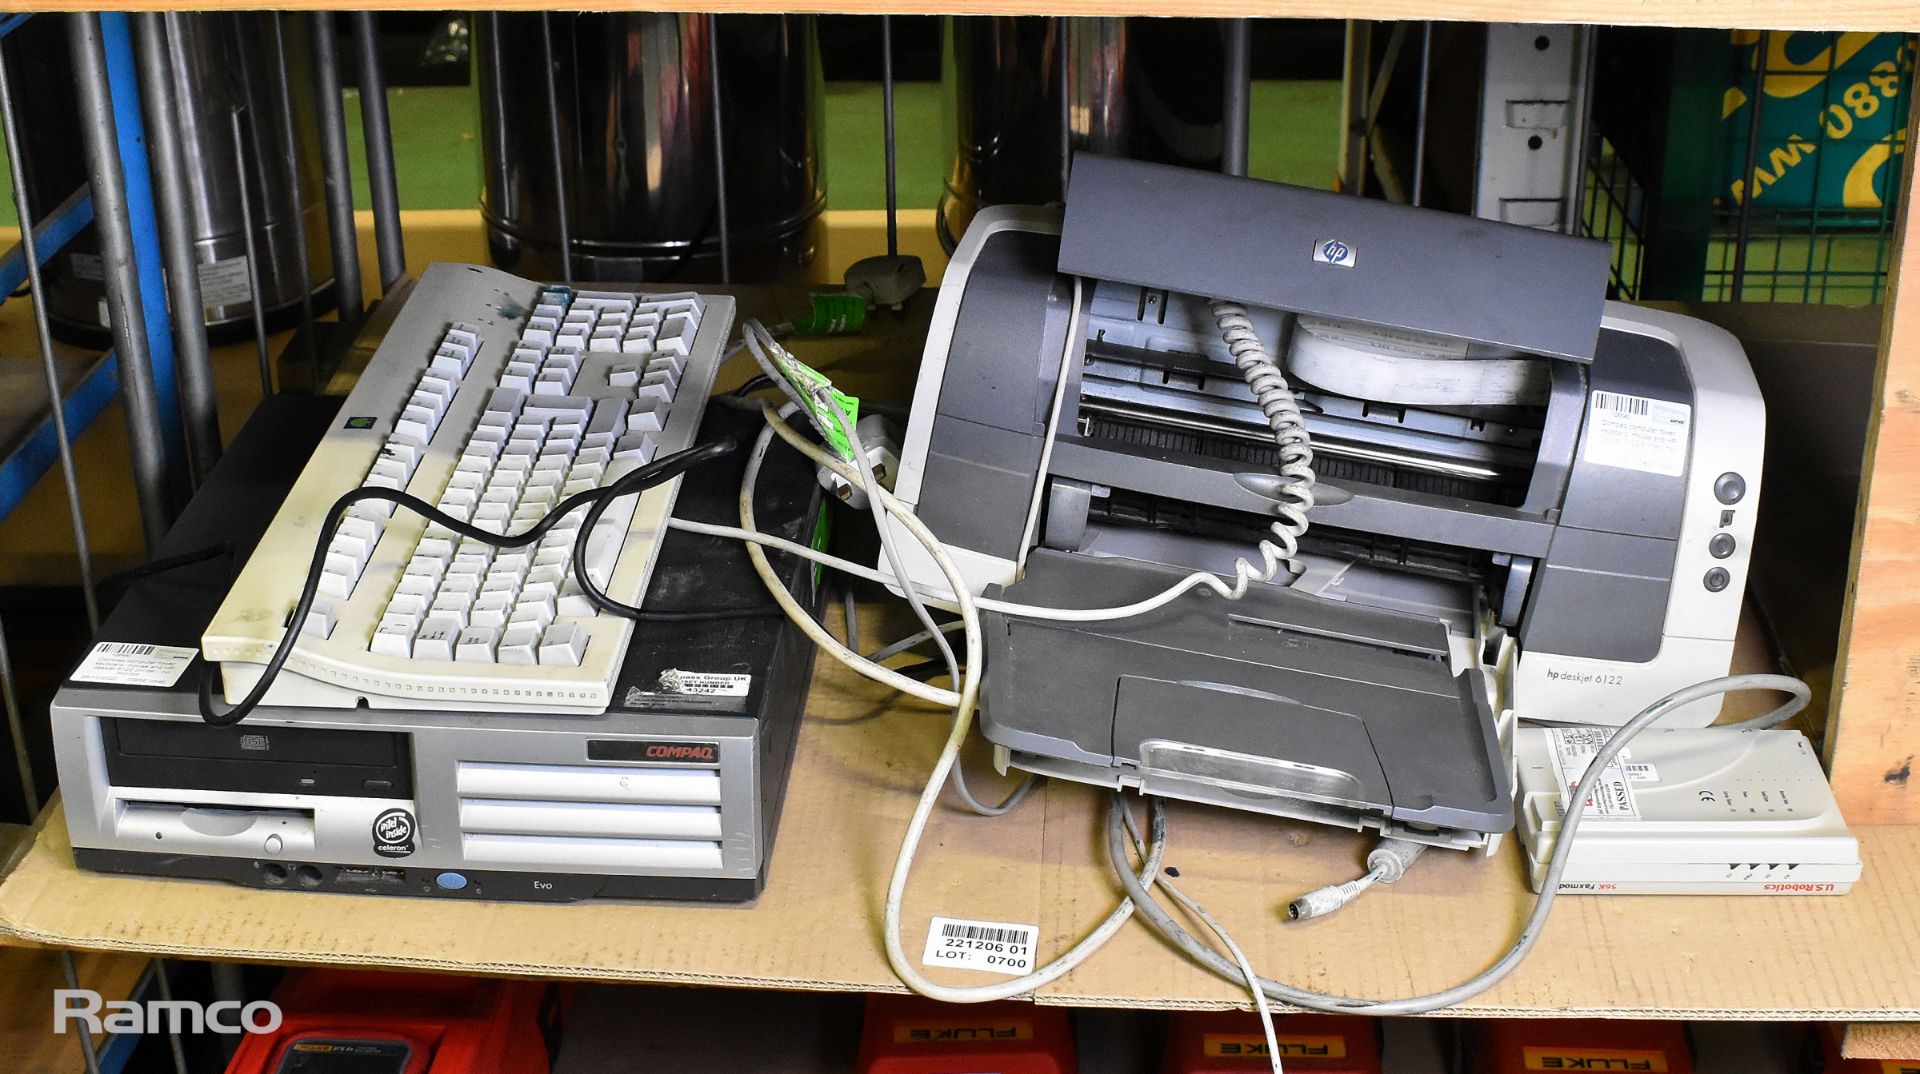 Compaq computer tower, keyboard, mouse and HP deskjet 6122 printer - no monitor